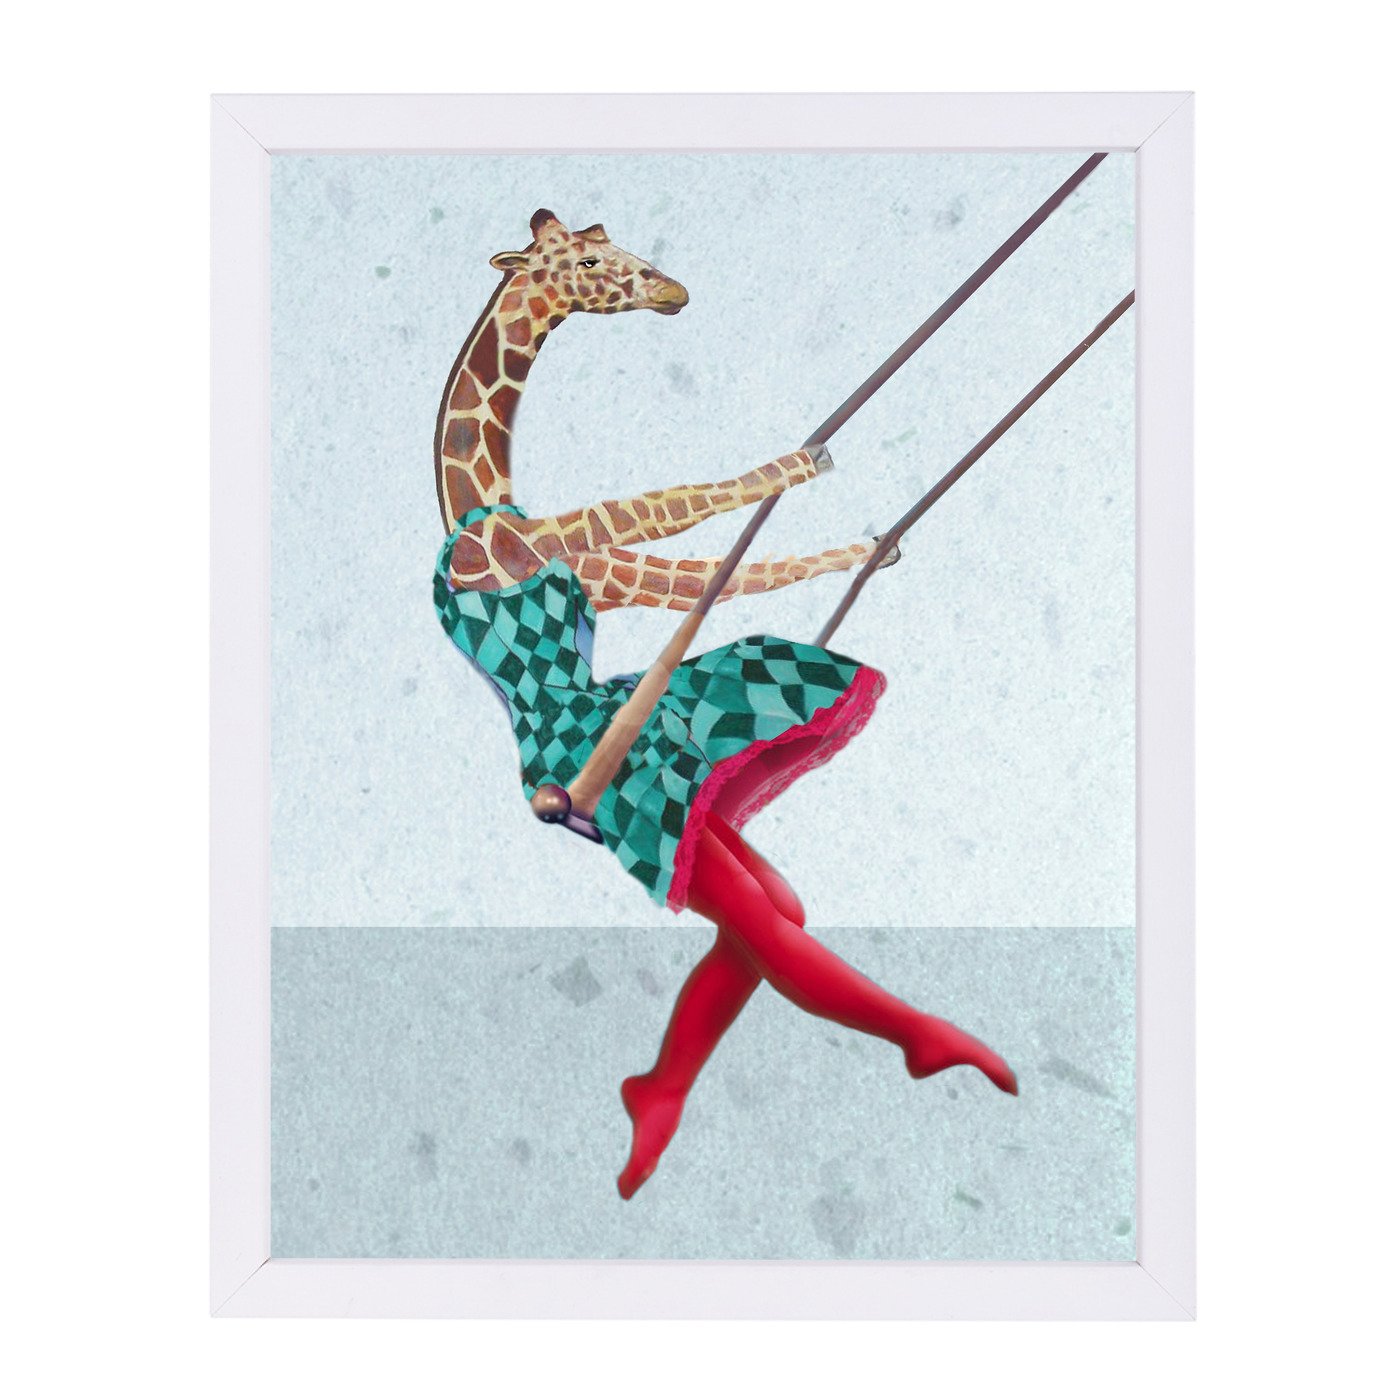 Giraffe On A Swing By Coco De Paris - Framed Print - Americanflat